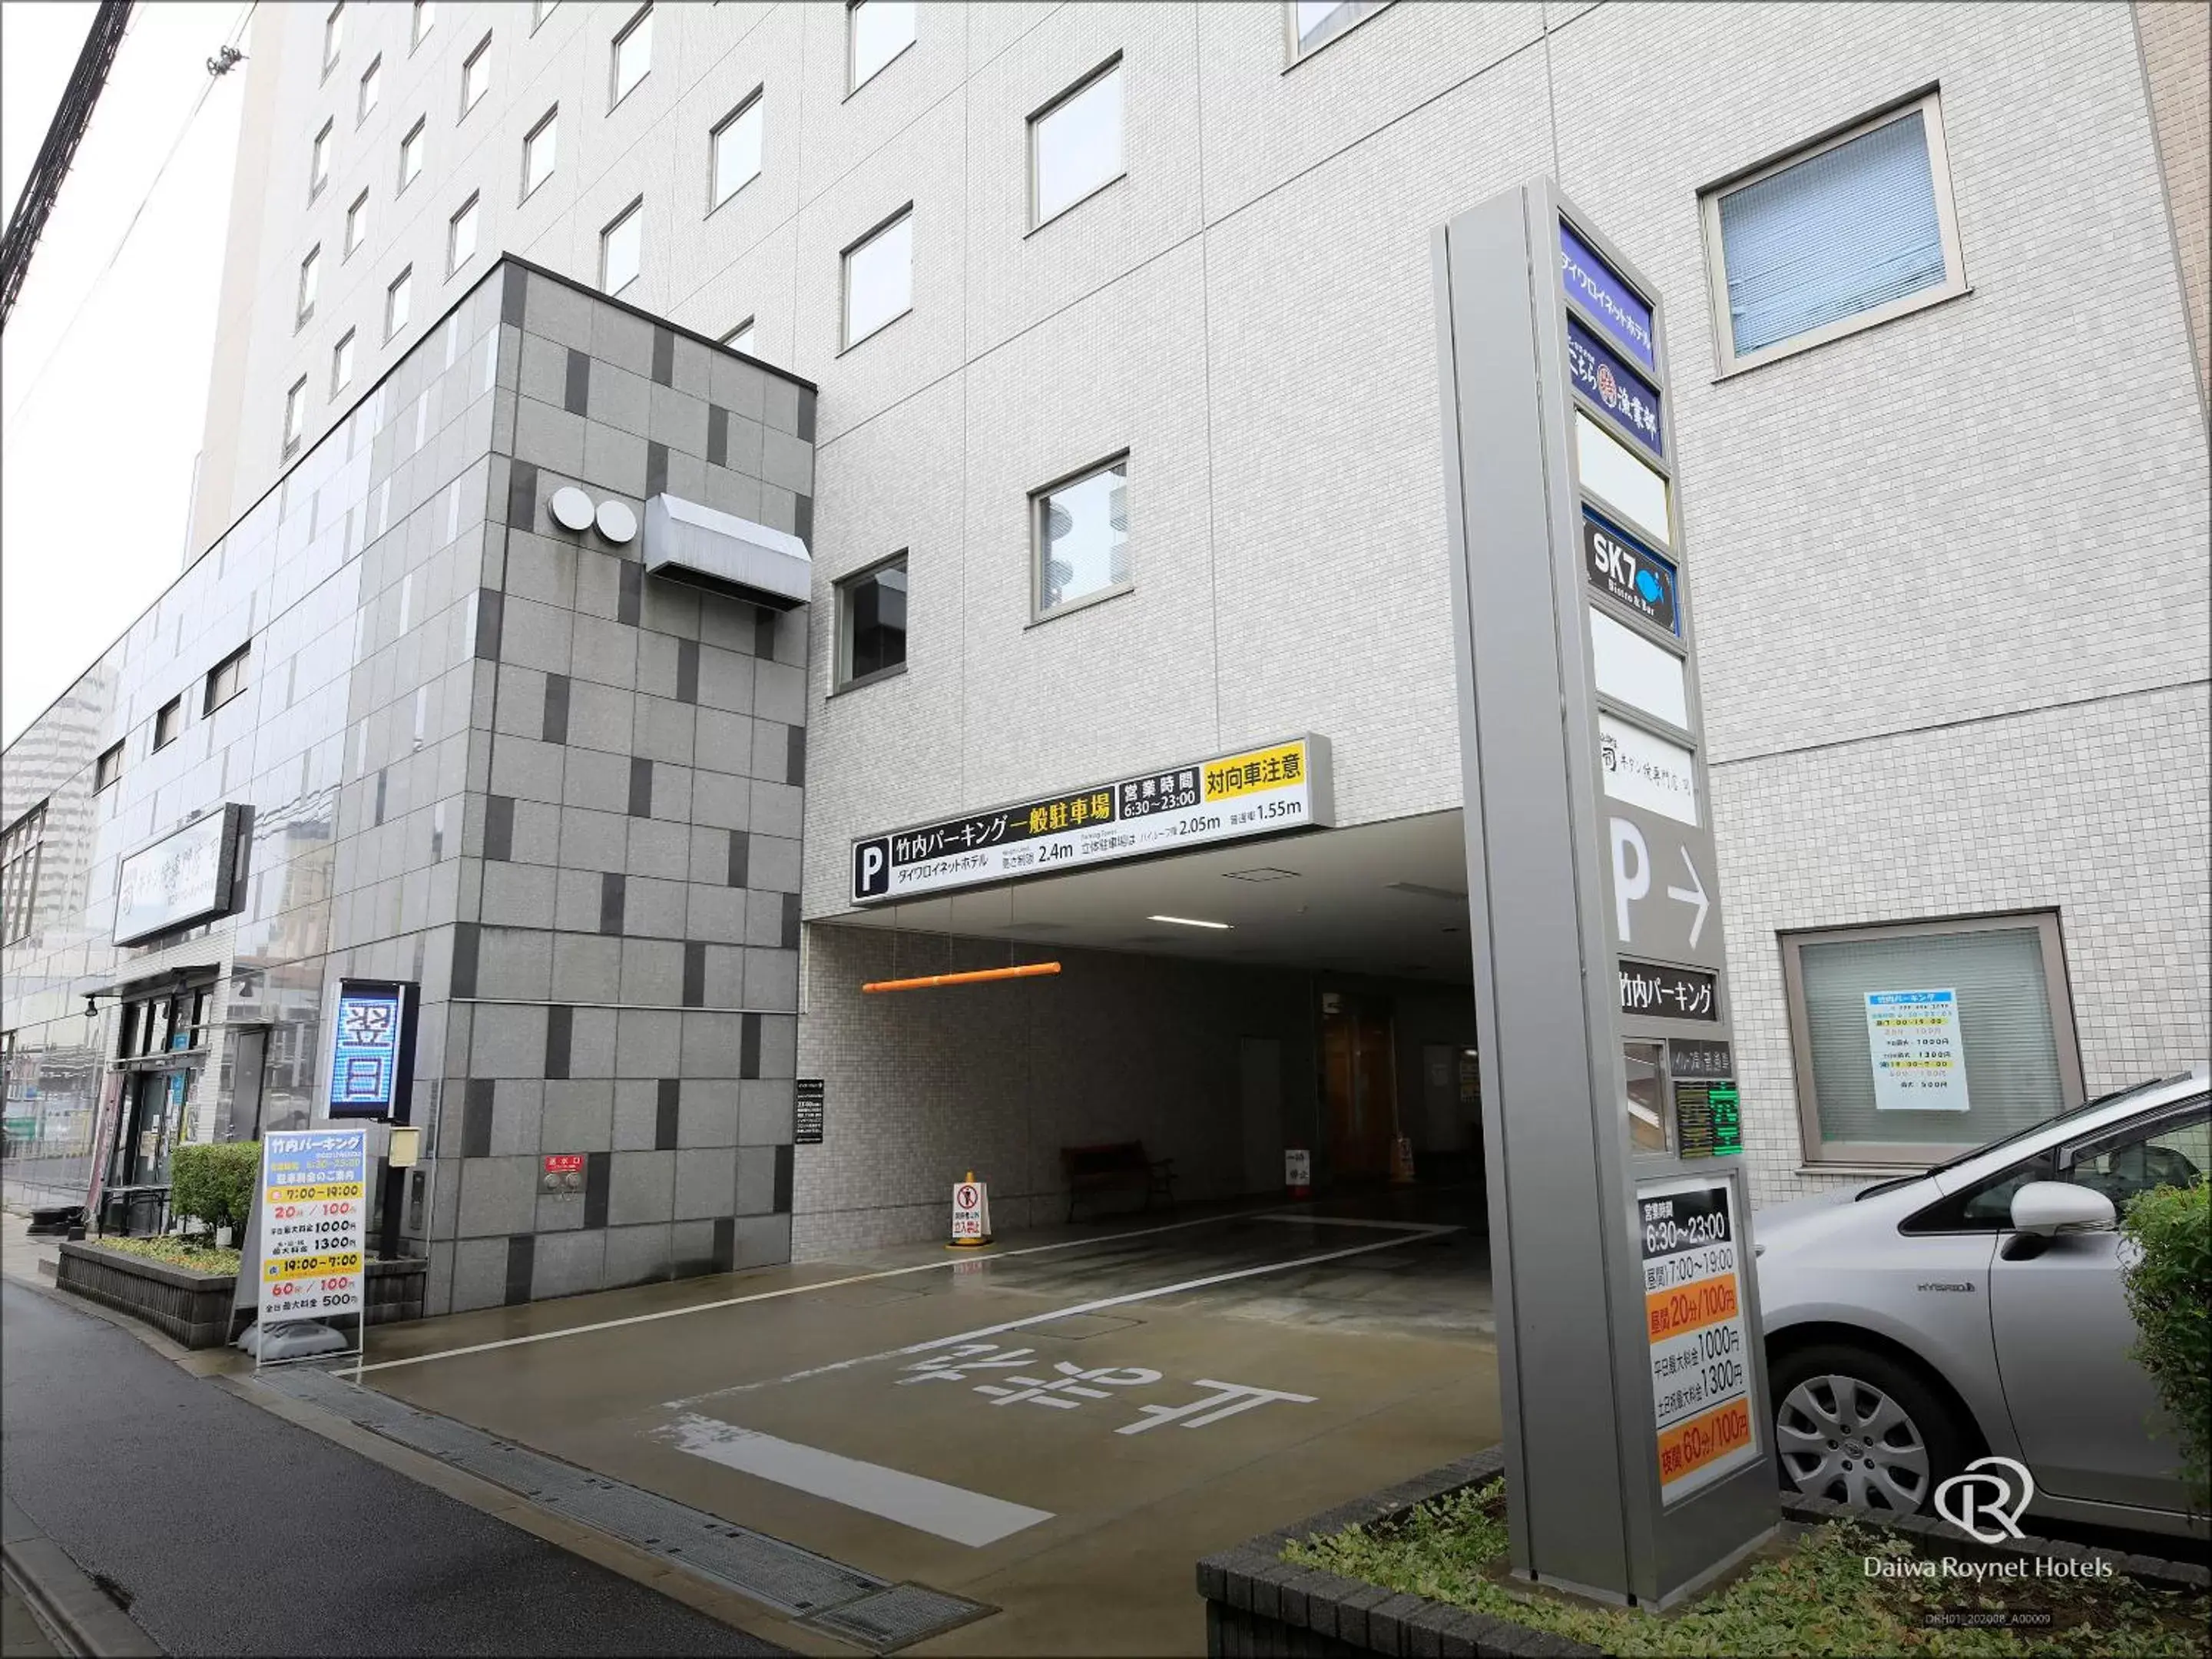 Property Building in Daiwa Roynet Hotel Sendai